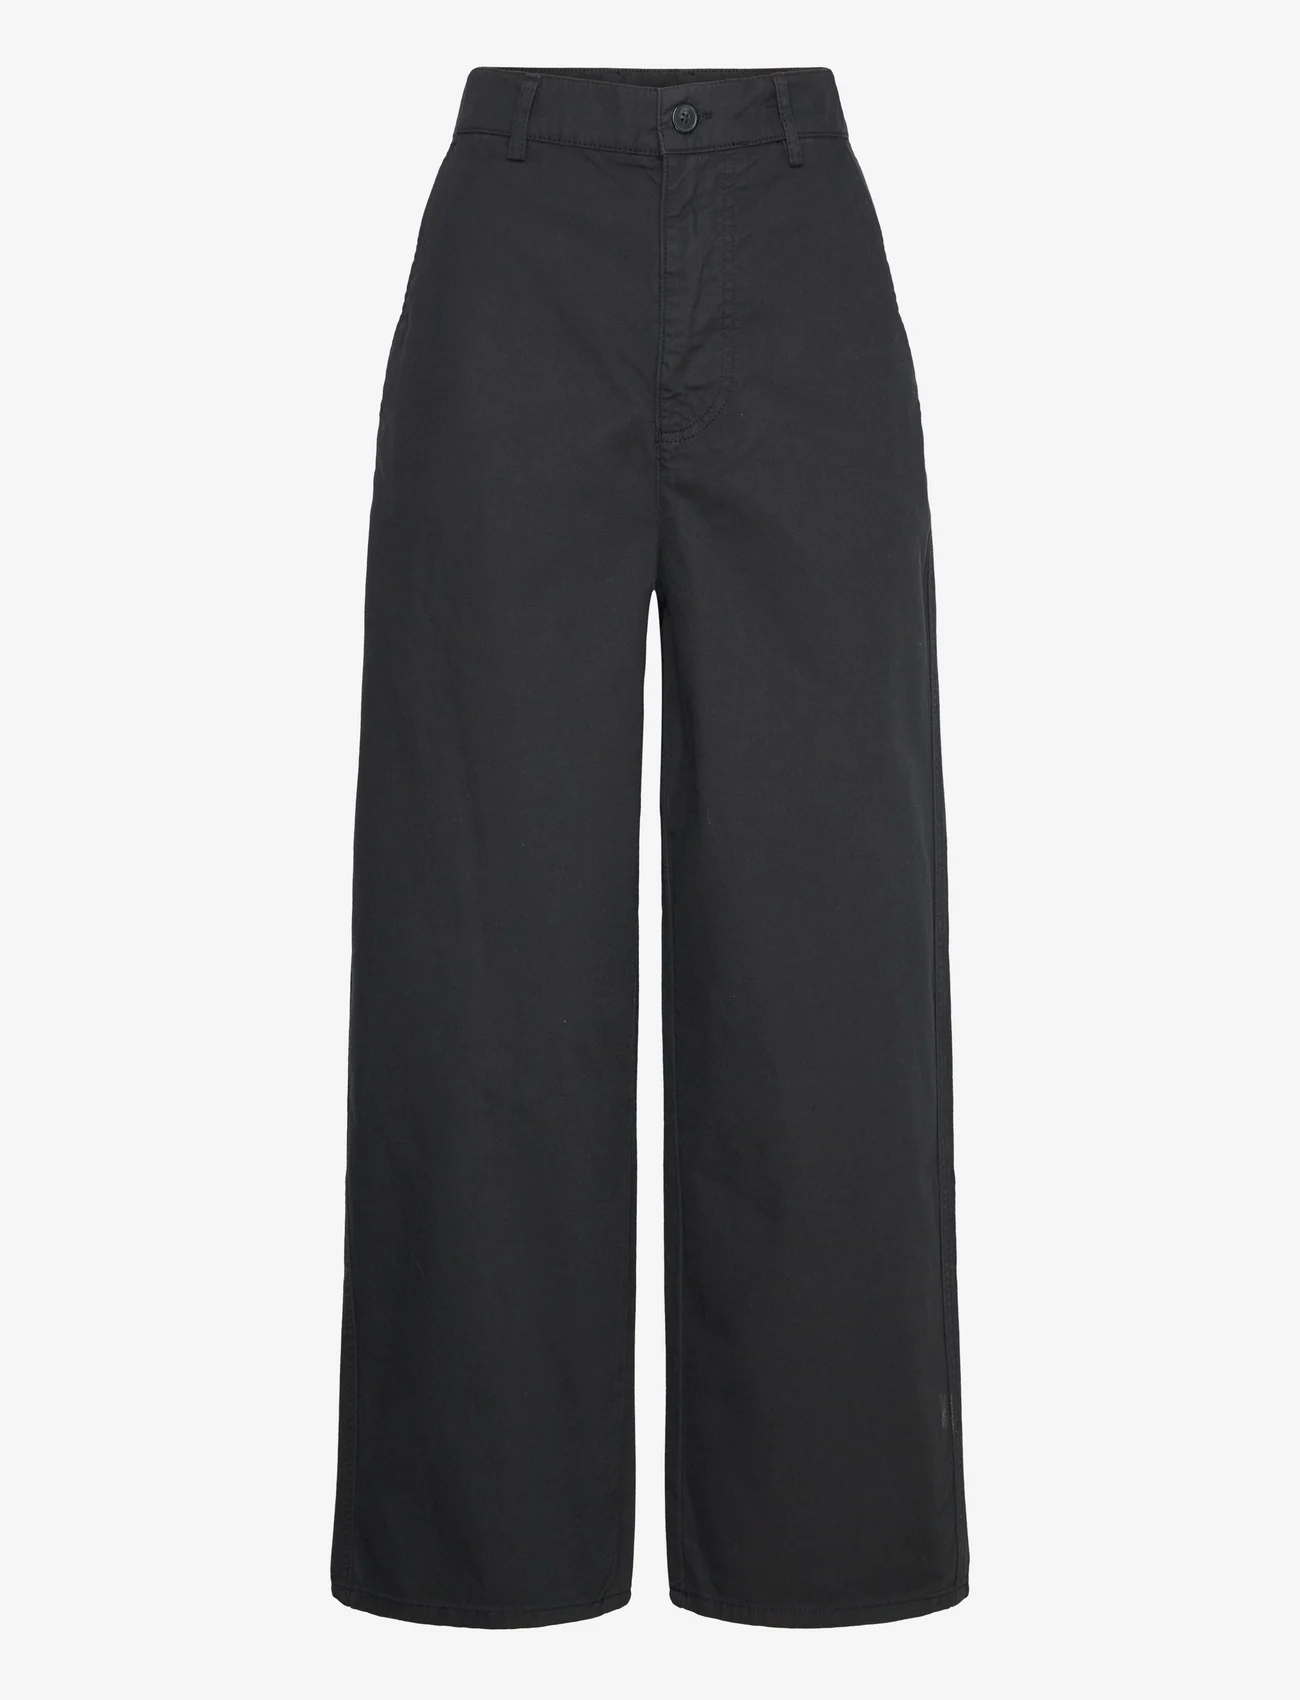 Hope - Neu Trousers Faded Black - chinot - faded black - 0